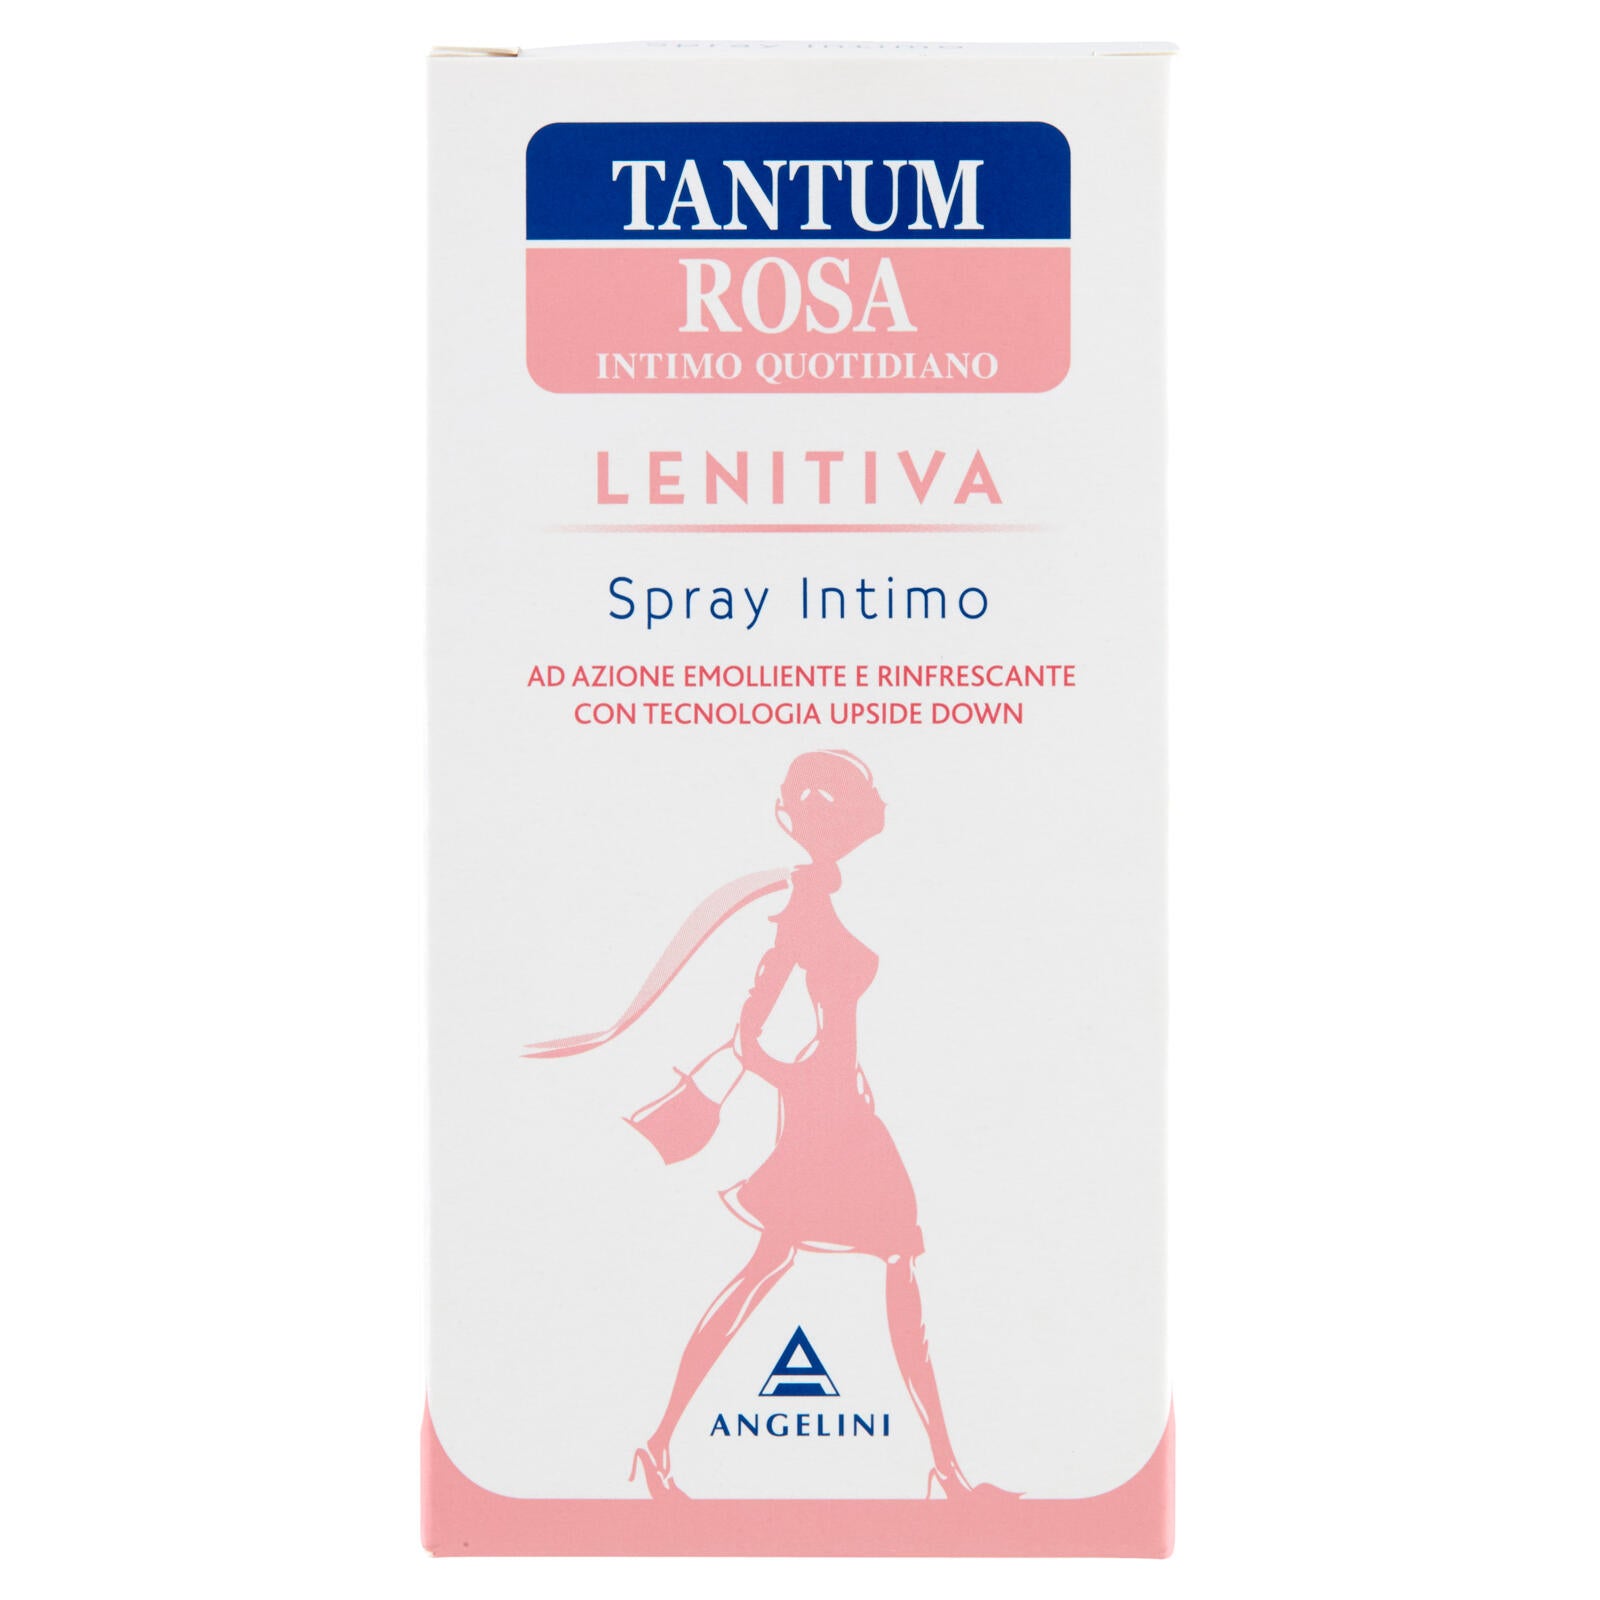 Tantum Rosa Intimo Quotidiano Lenitiva Spray Intimo 40 ml